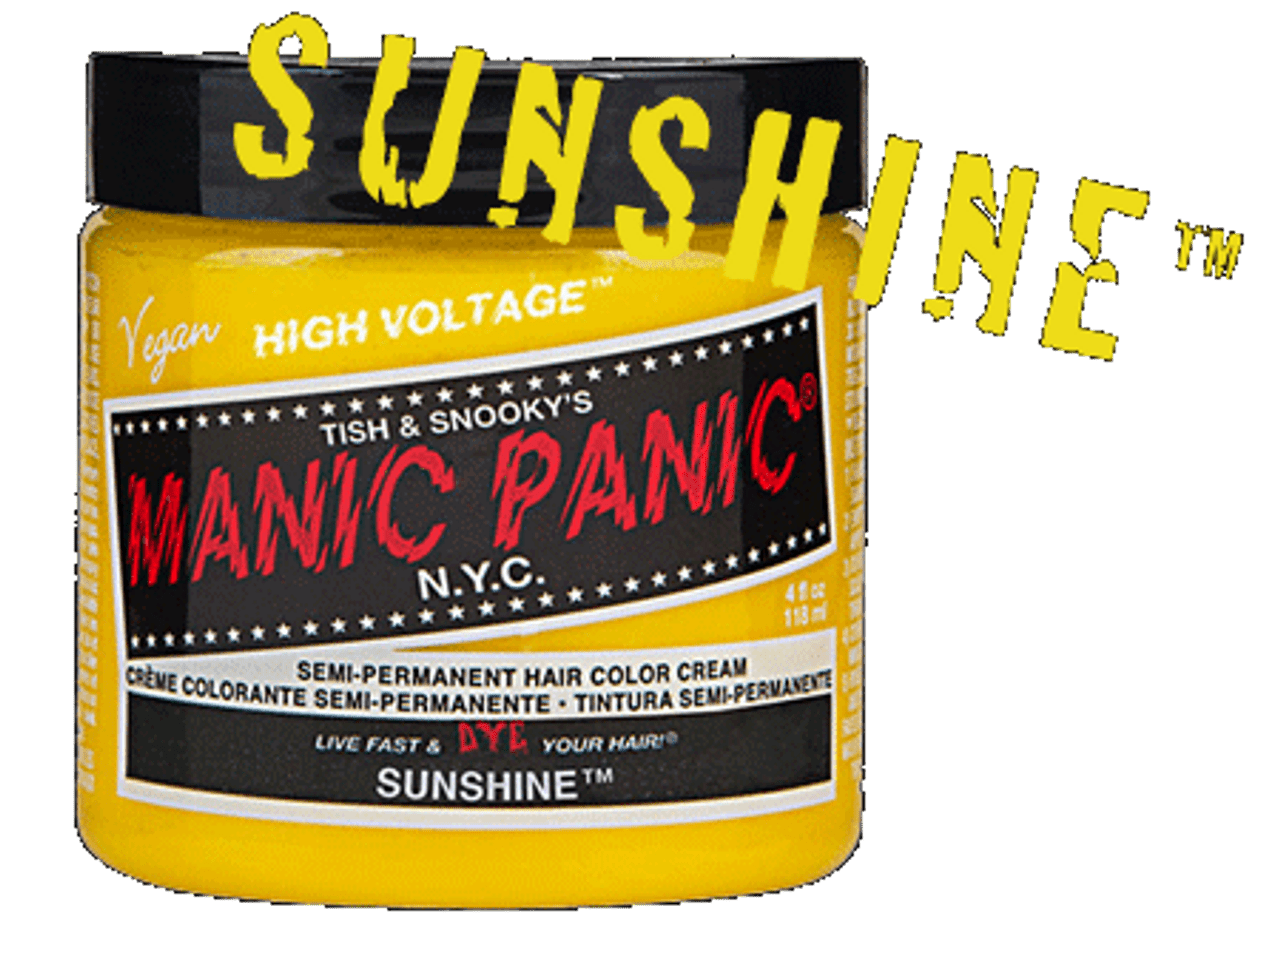 Manic Panic Semi-Permanent Hair Color Cream - wide 4